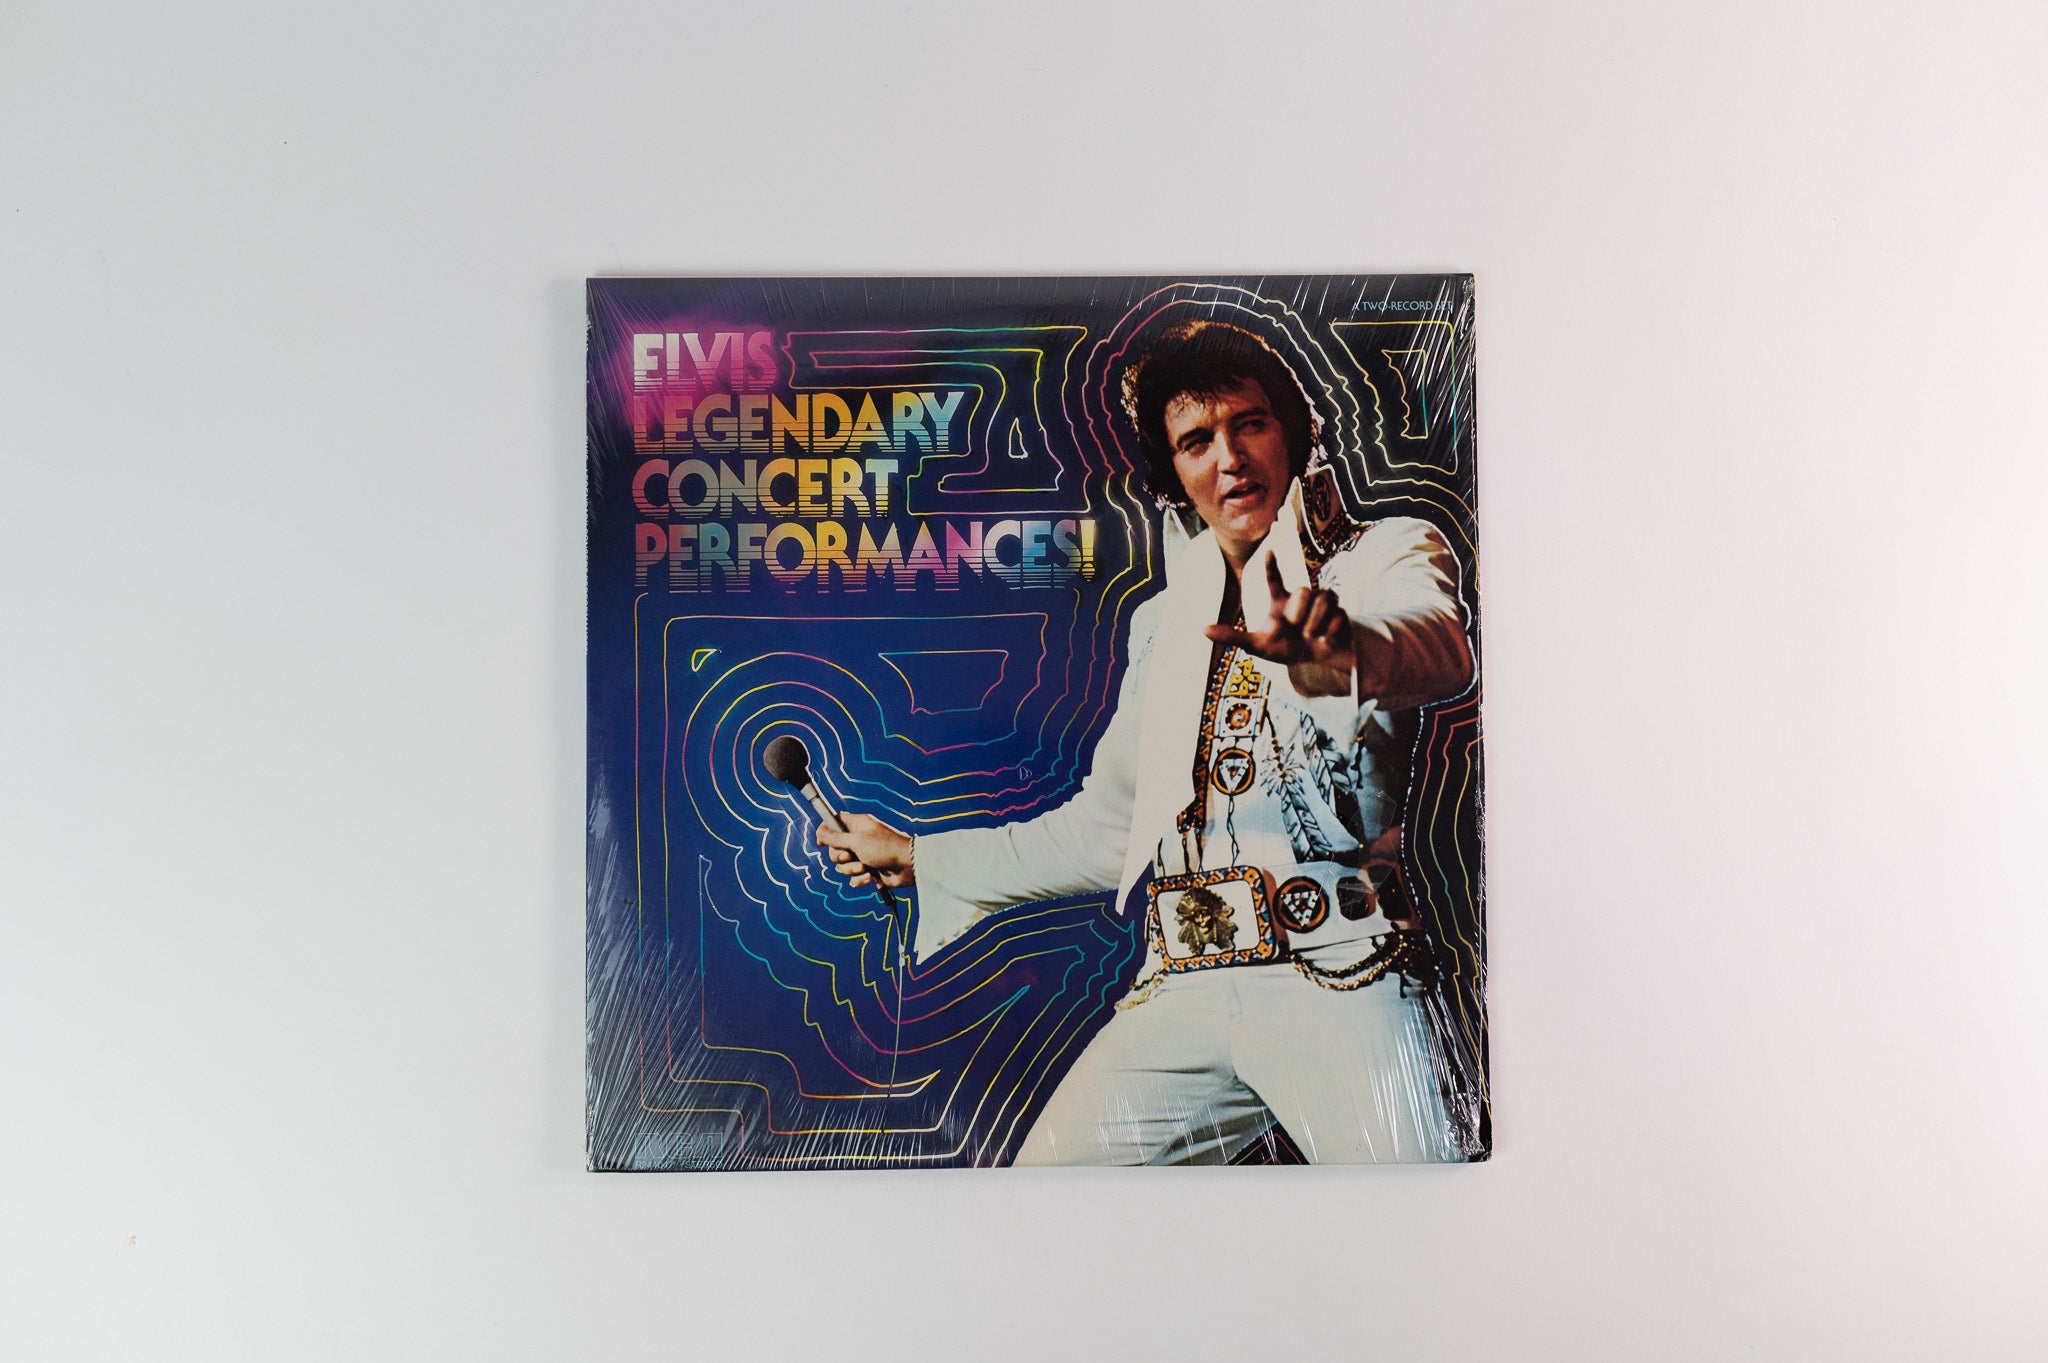 Elvis Presley - Elvis - Legendary Concert Performances! on RCA Sealed